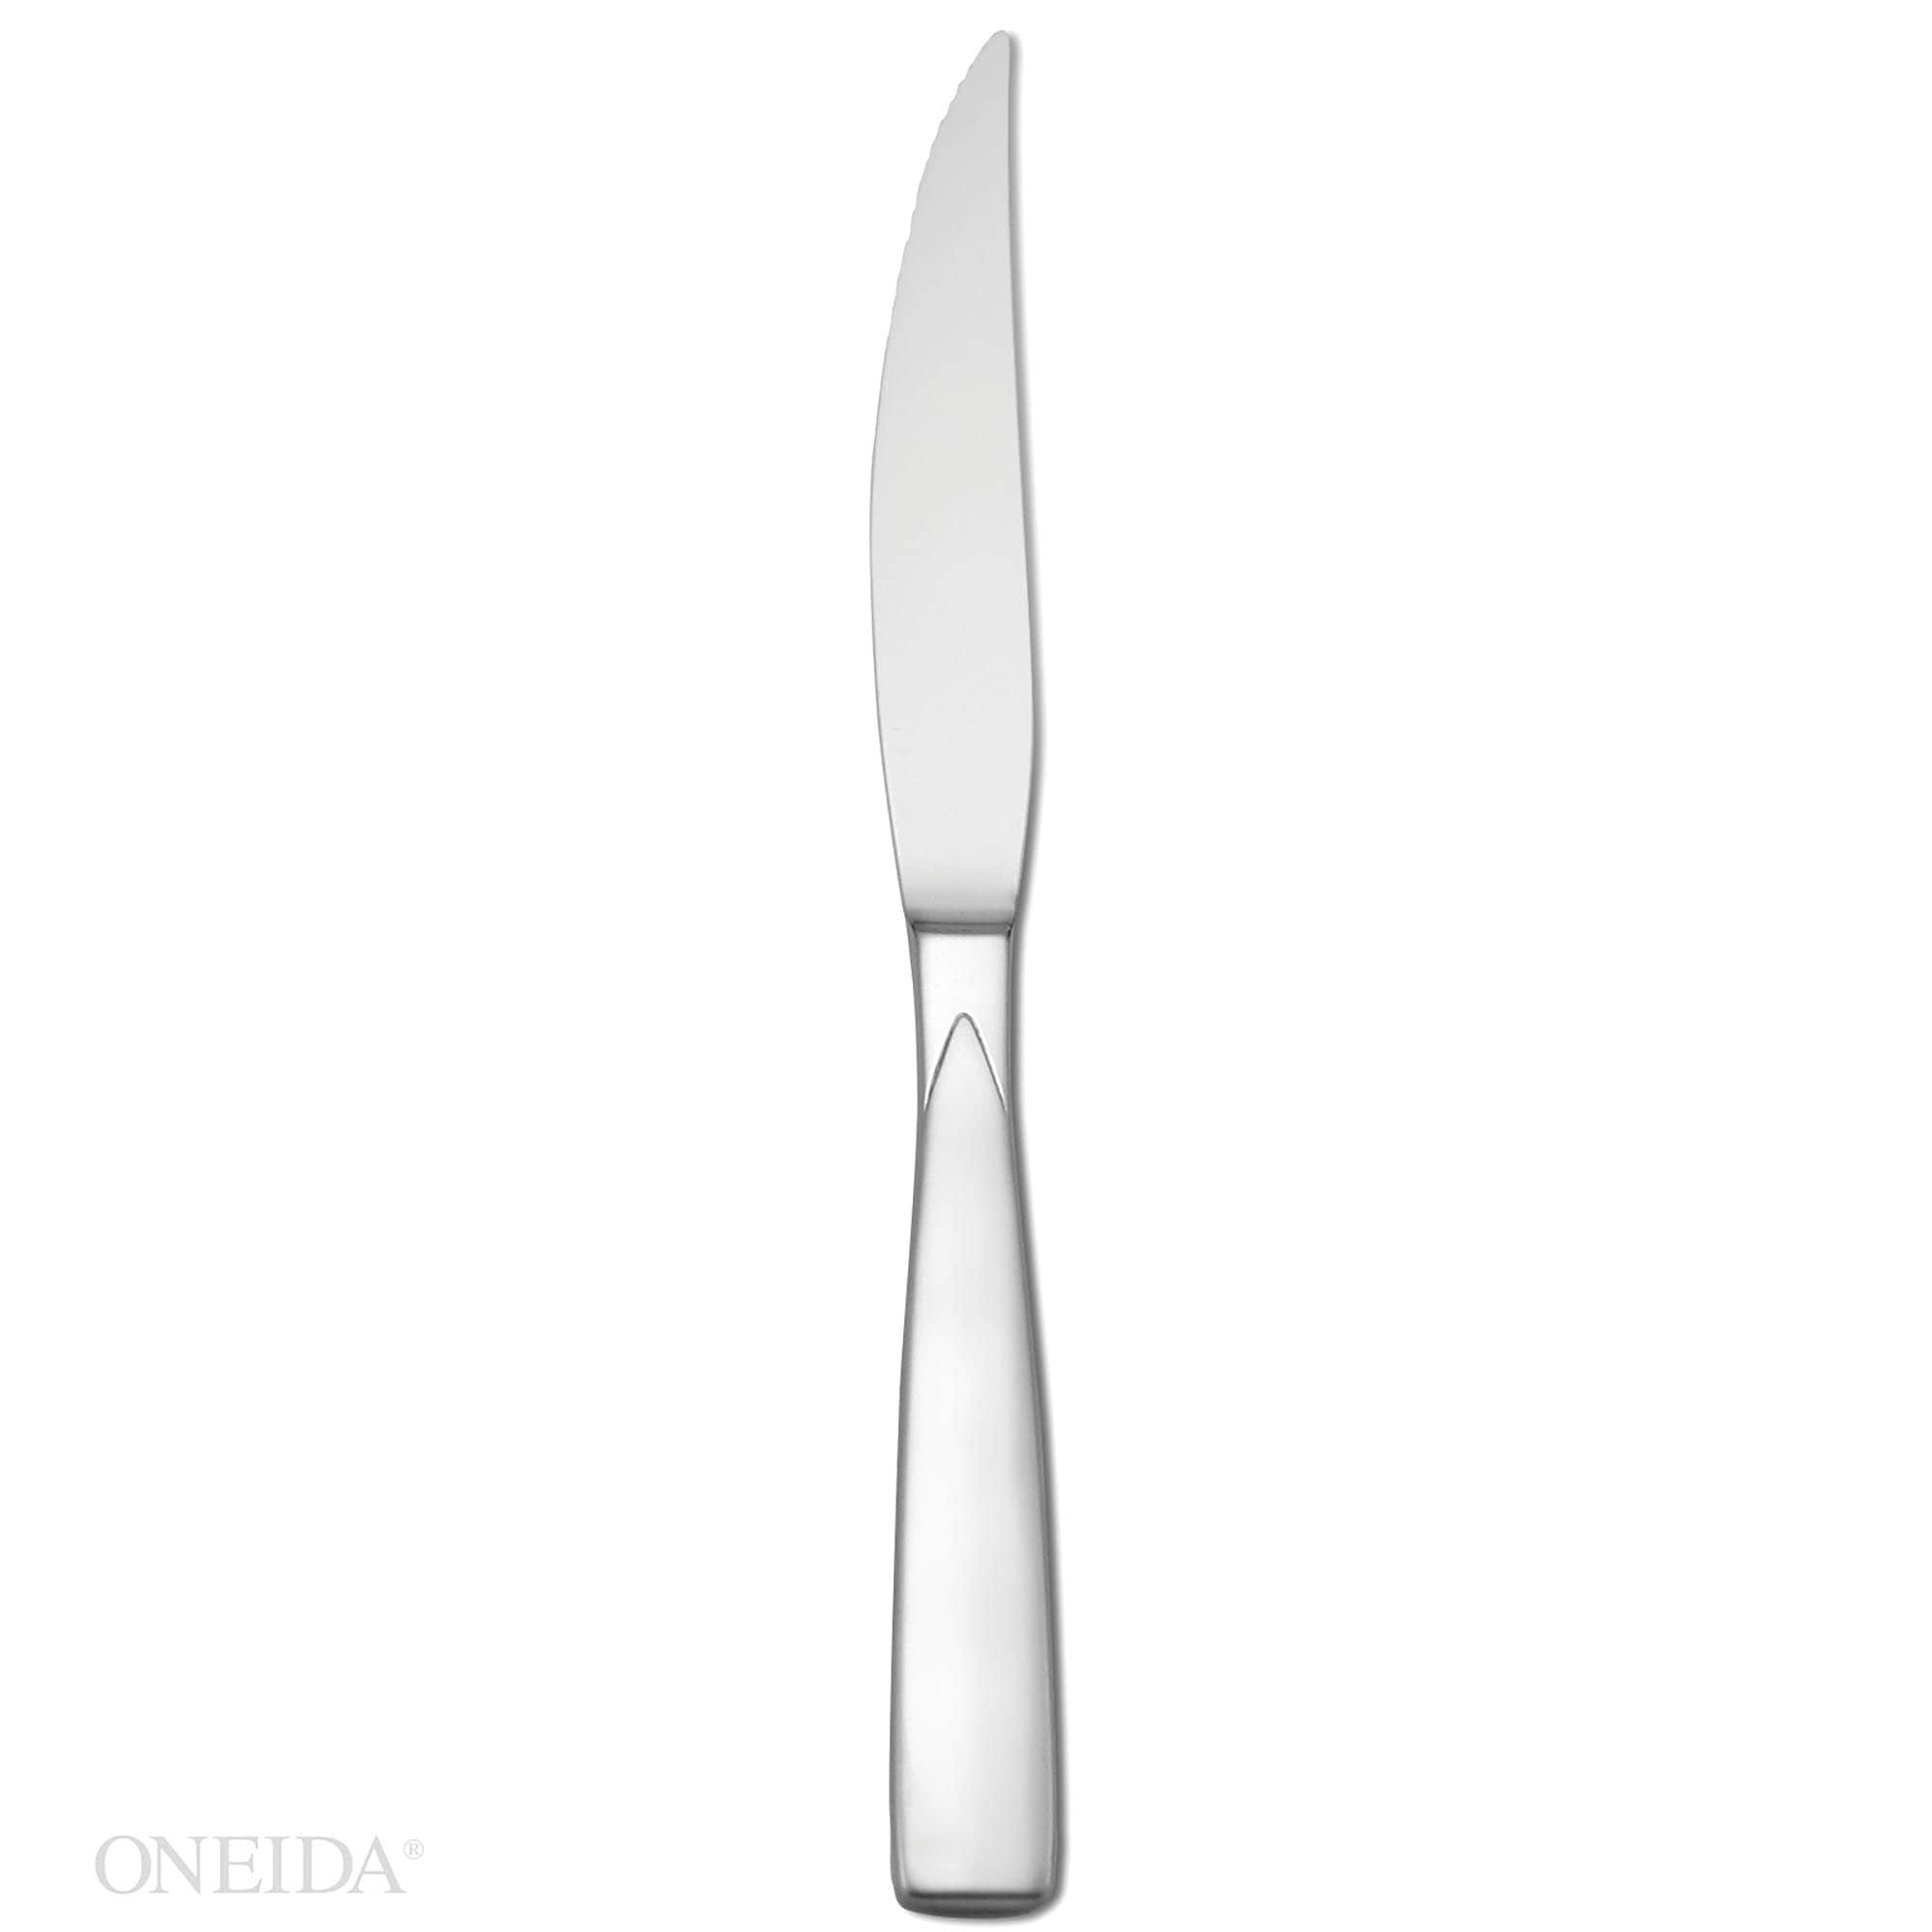 Oneida Stainless, Wood Handle Steak Knife - Set of 6 Knives